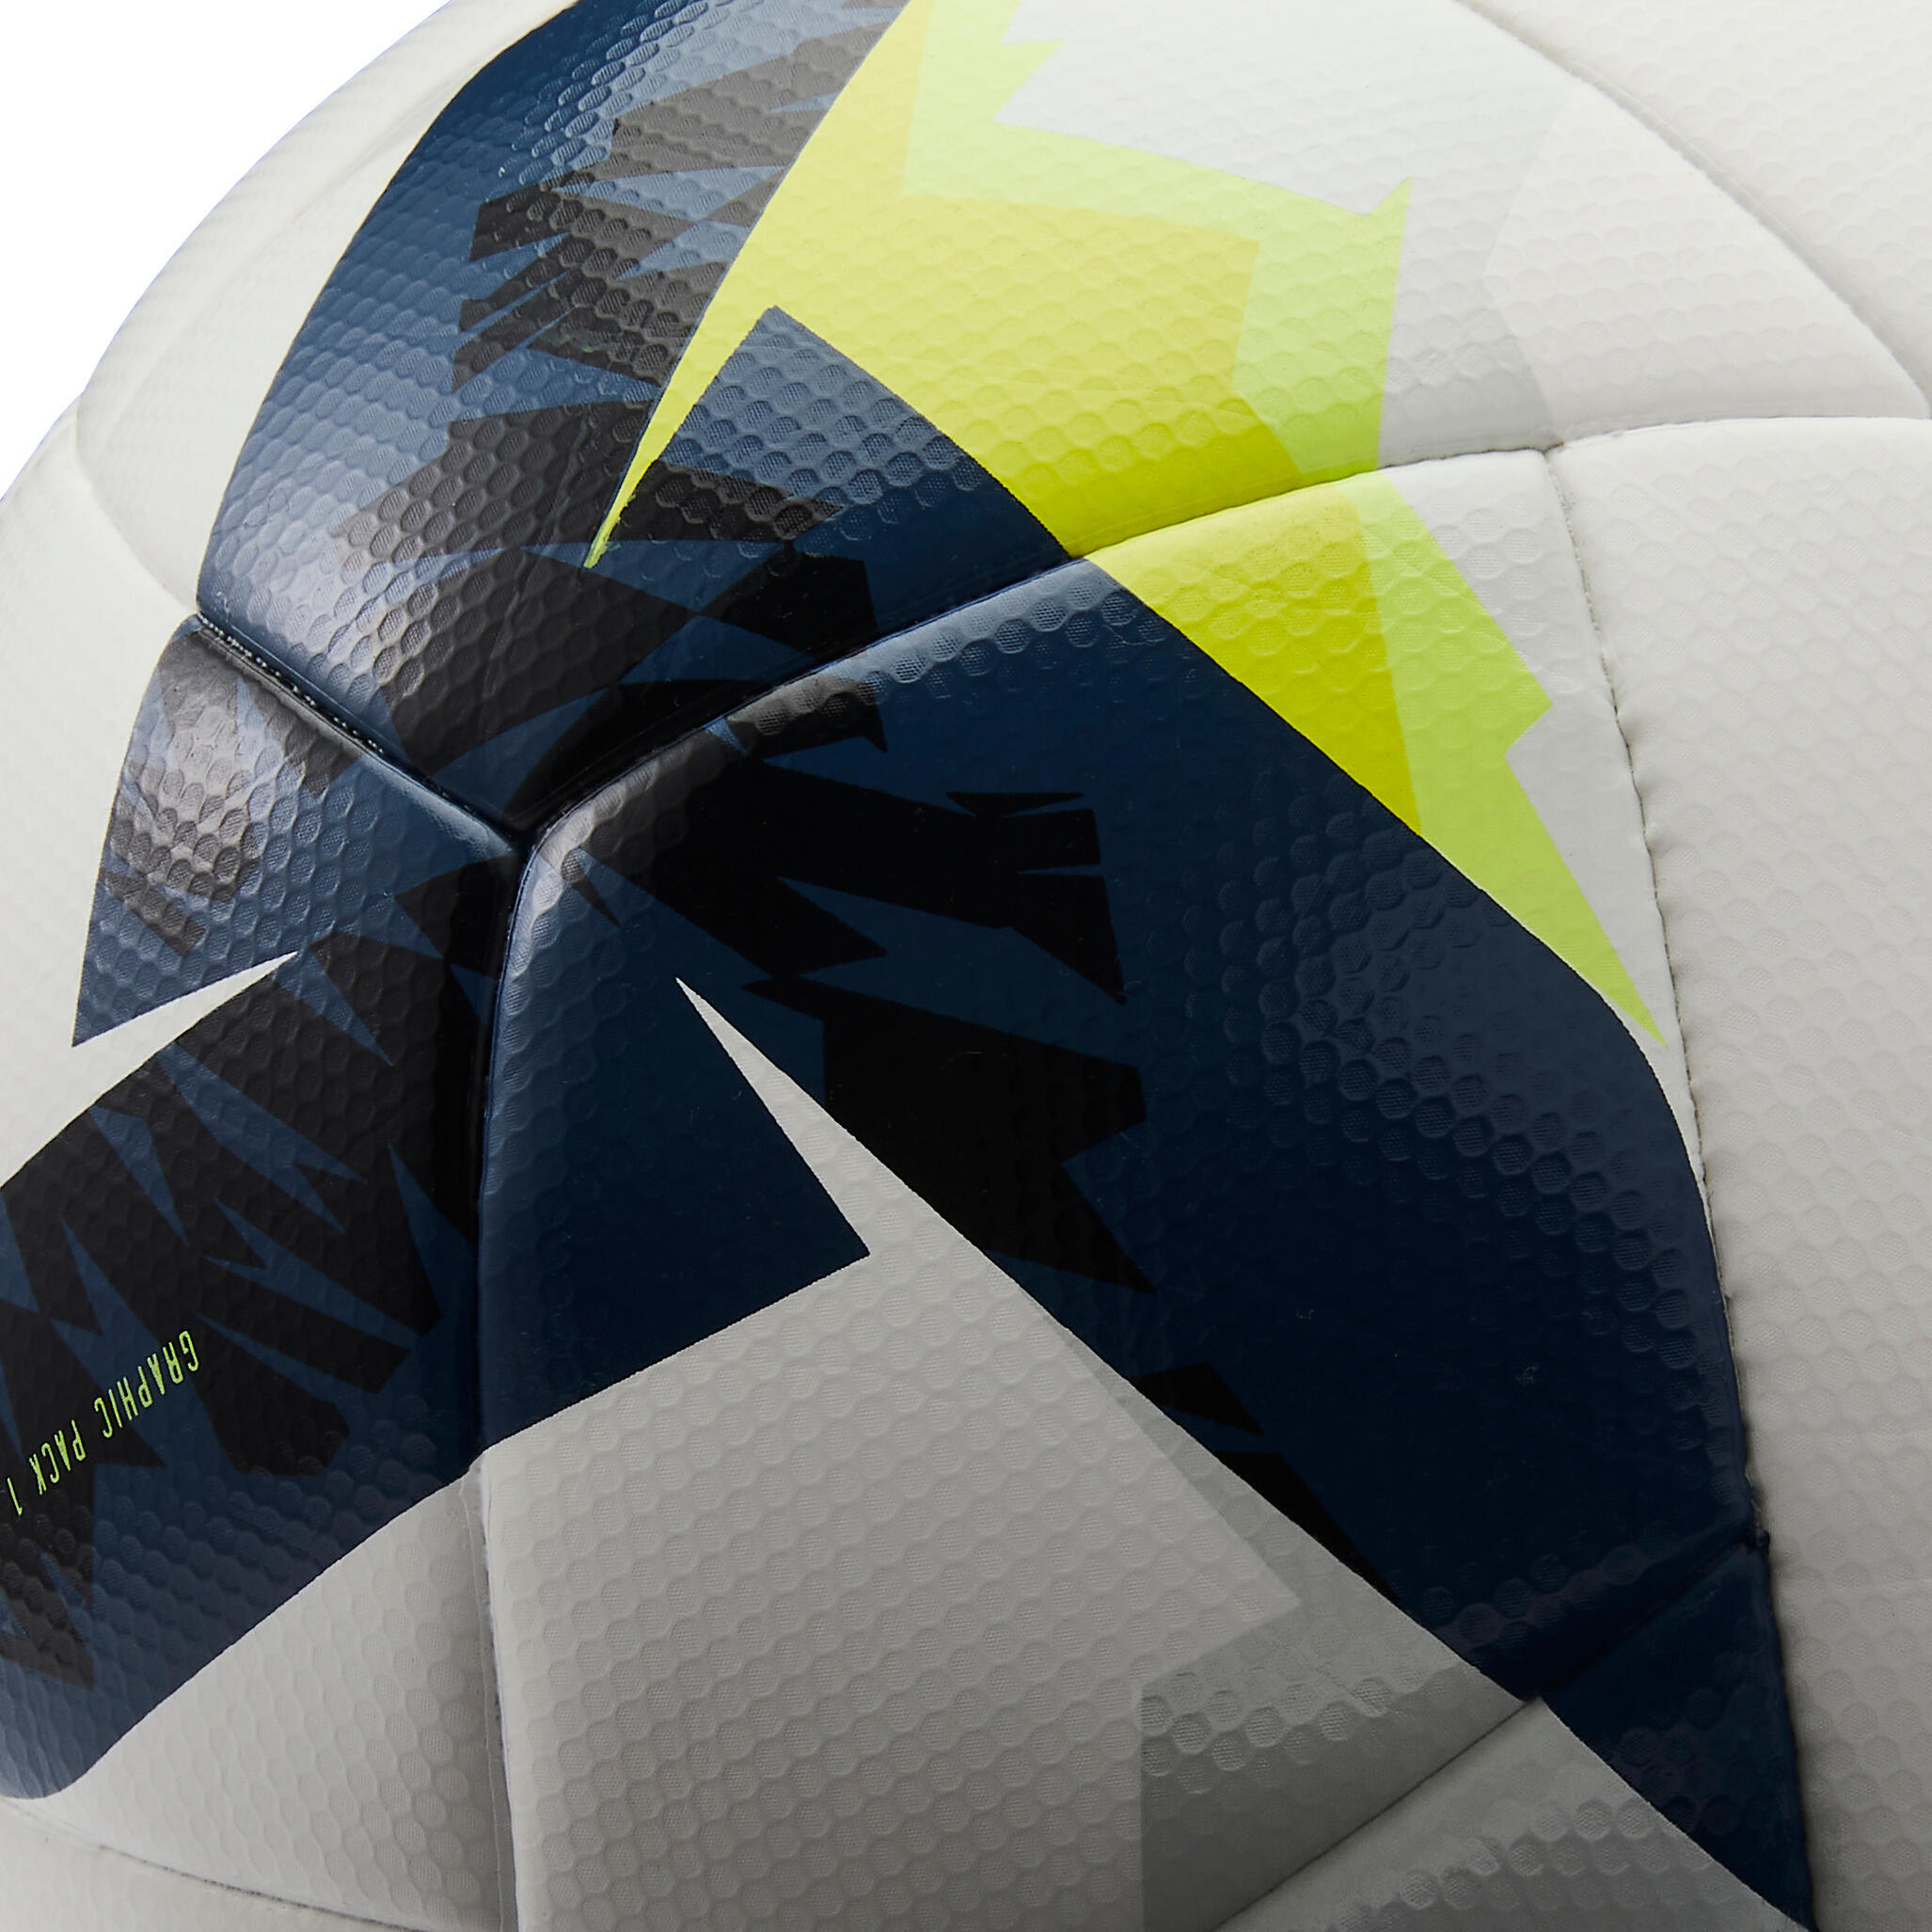 Hybrid Football FIFA Basic F550 Size 5 - White/Yellow 3/7